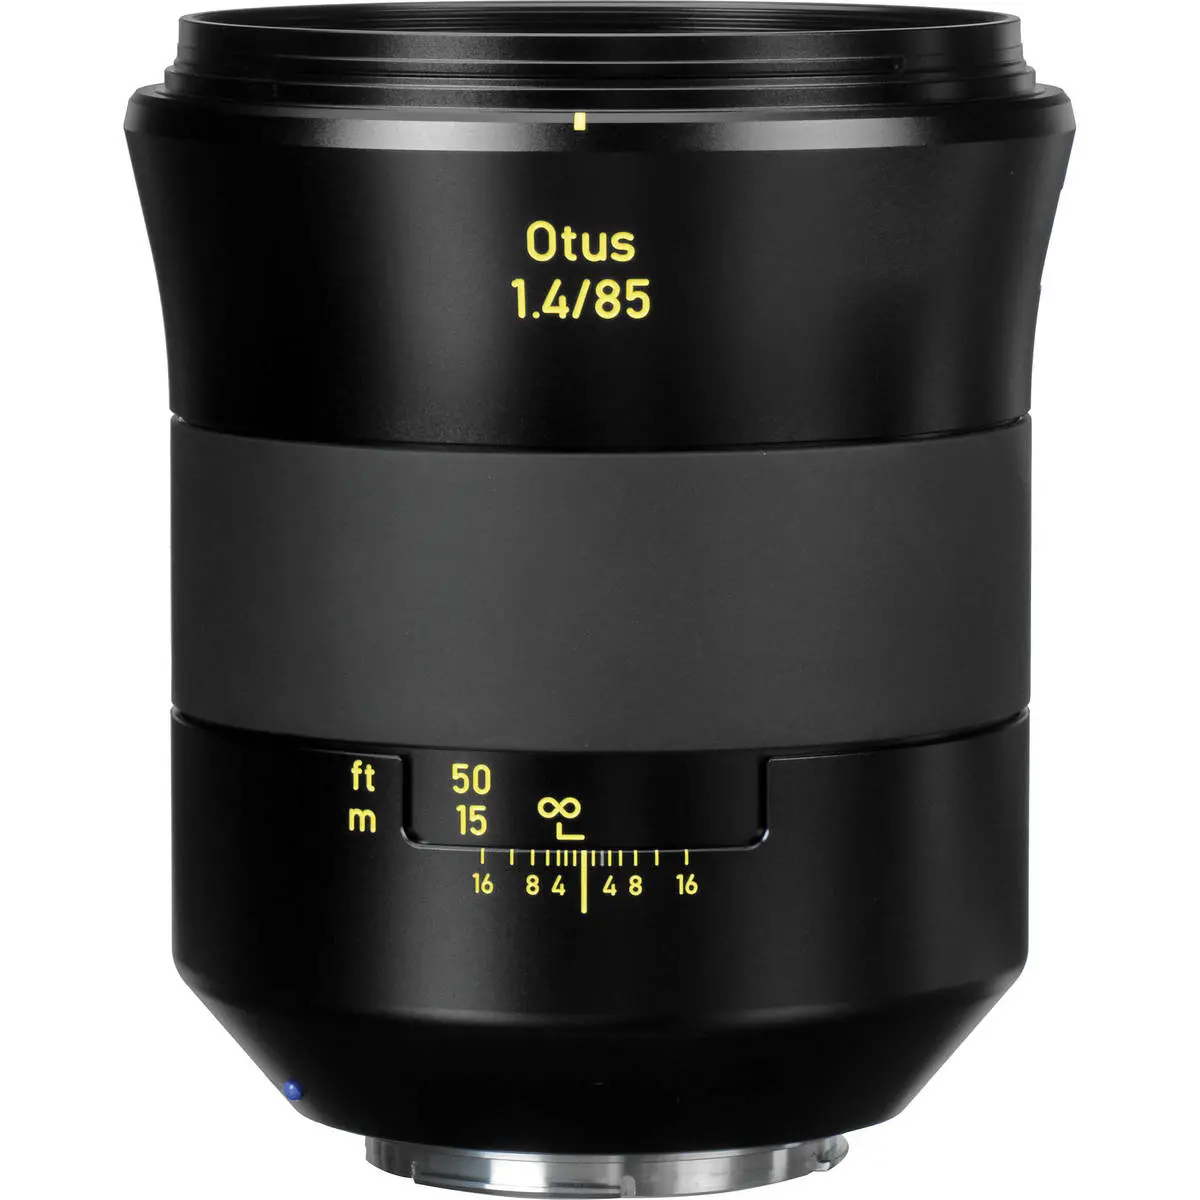 3. Carl Zeiss Otus Planar T* ZE 1.4/85 (Canon) Lens